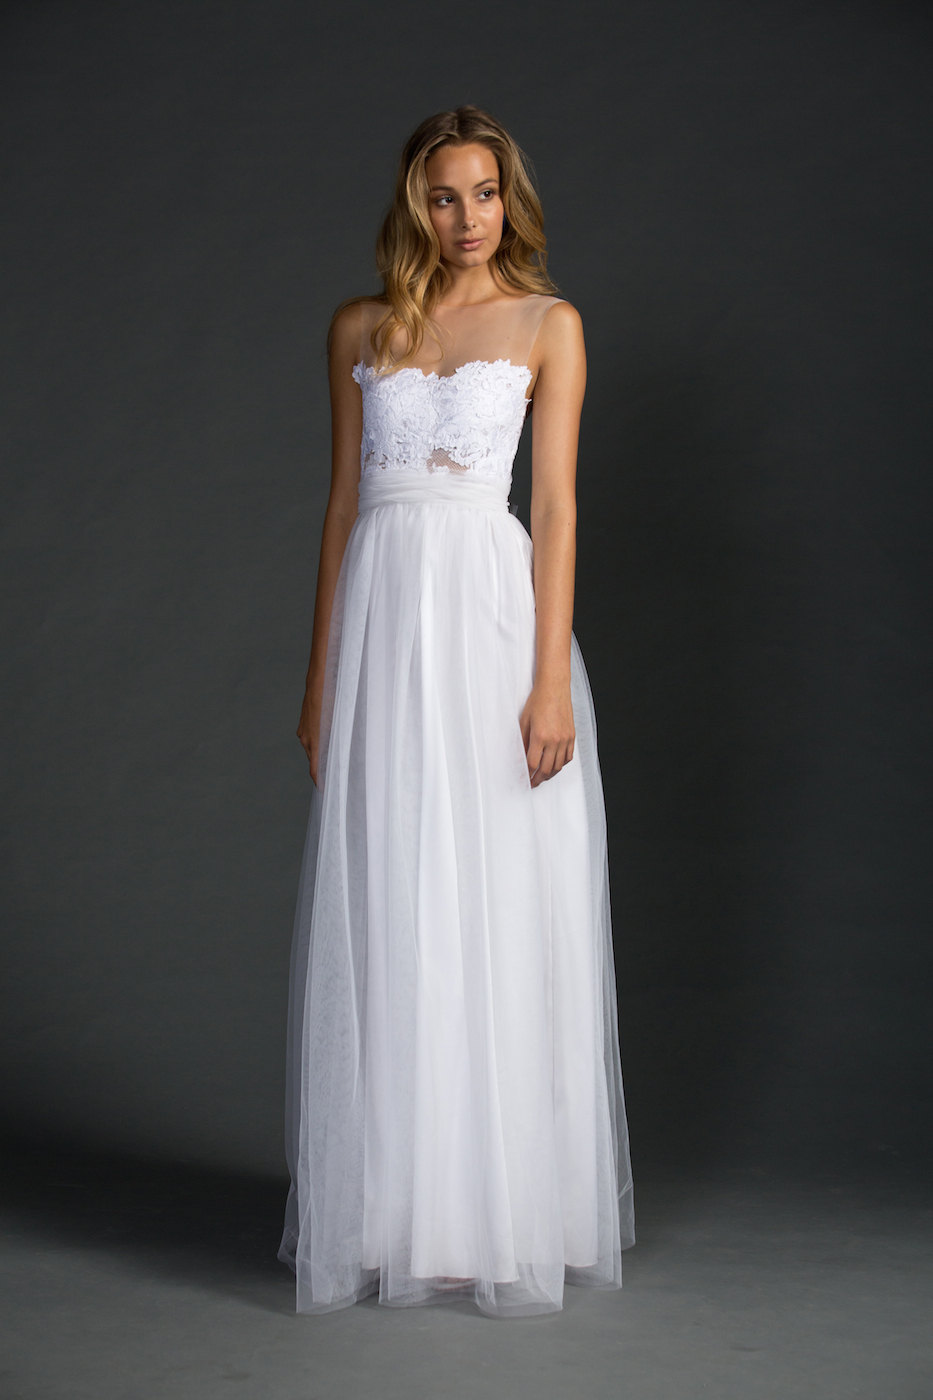 Dreamy Sheer Neckline Wedding Dress | via https://emmalinebride.com/bride/sheer-neckline-wedding-dress/ width=